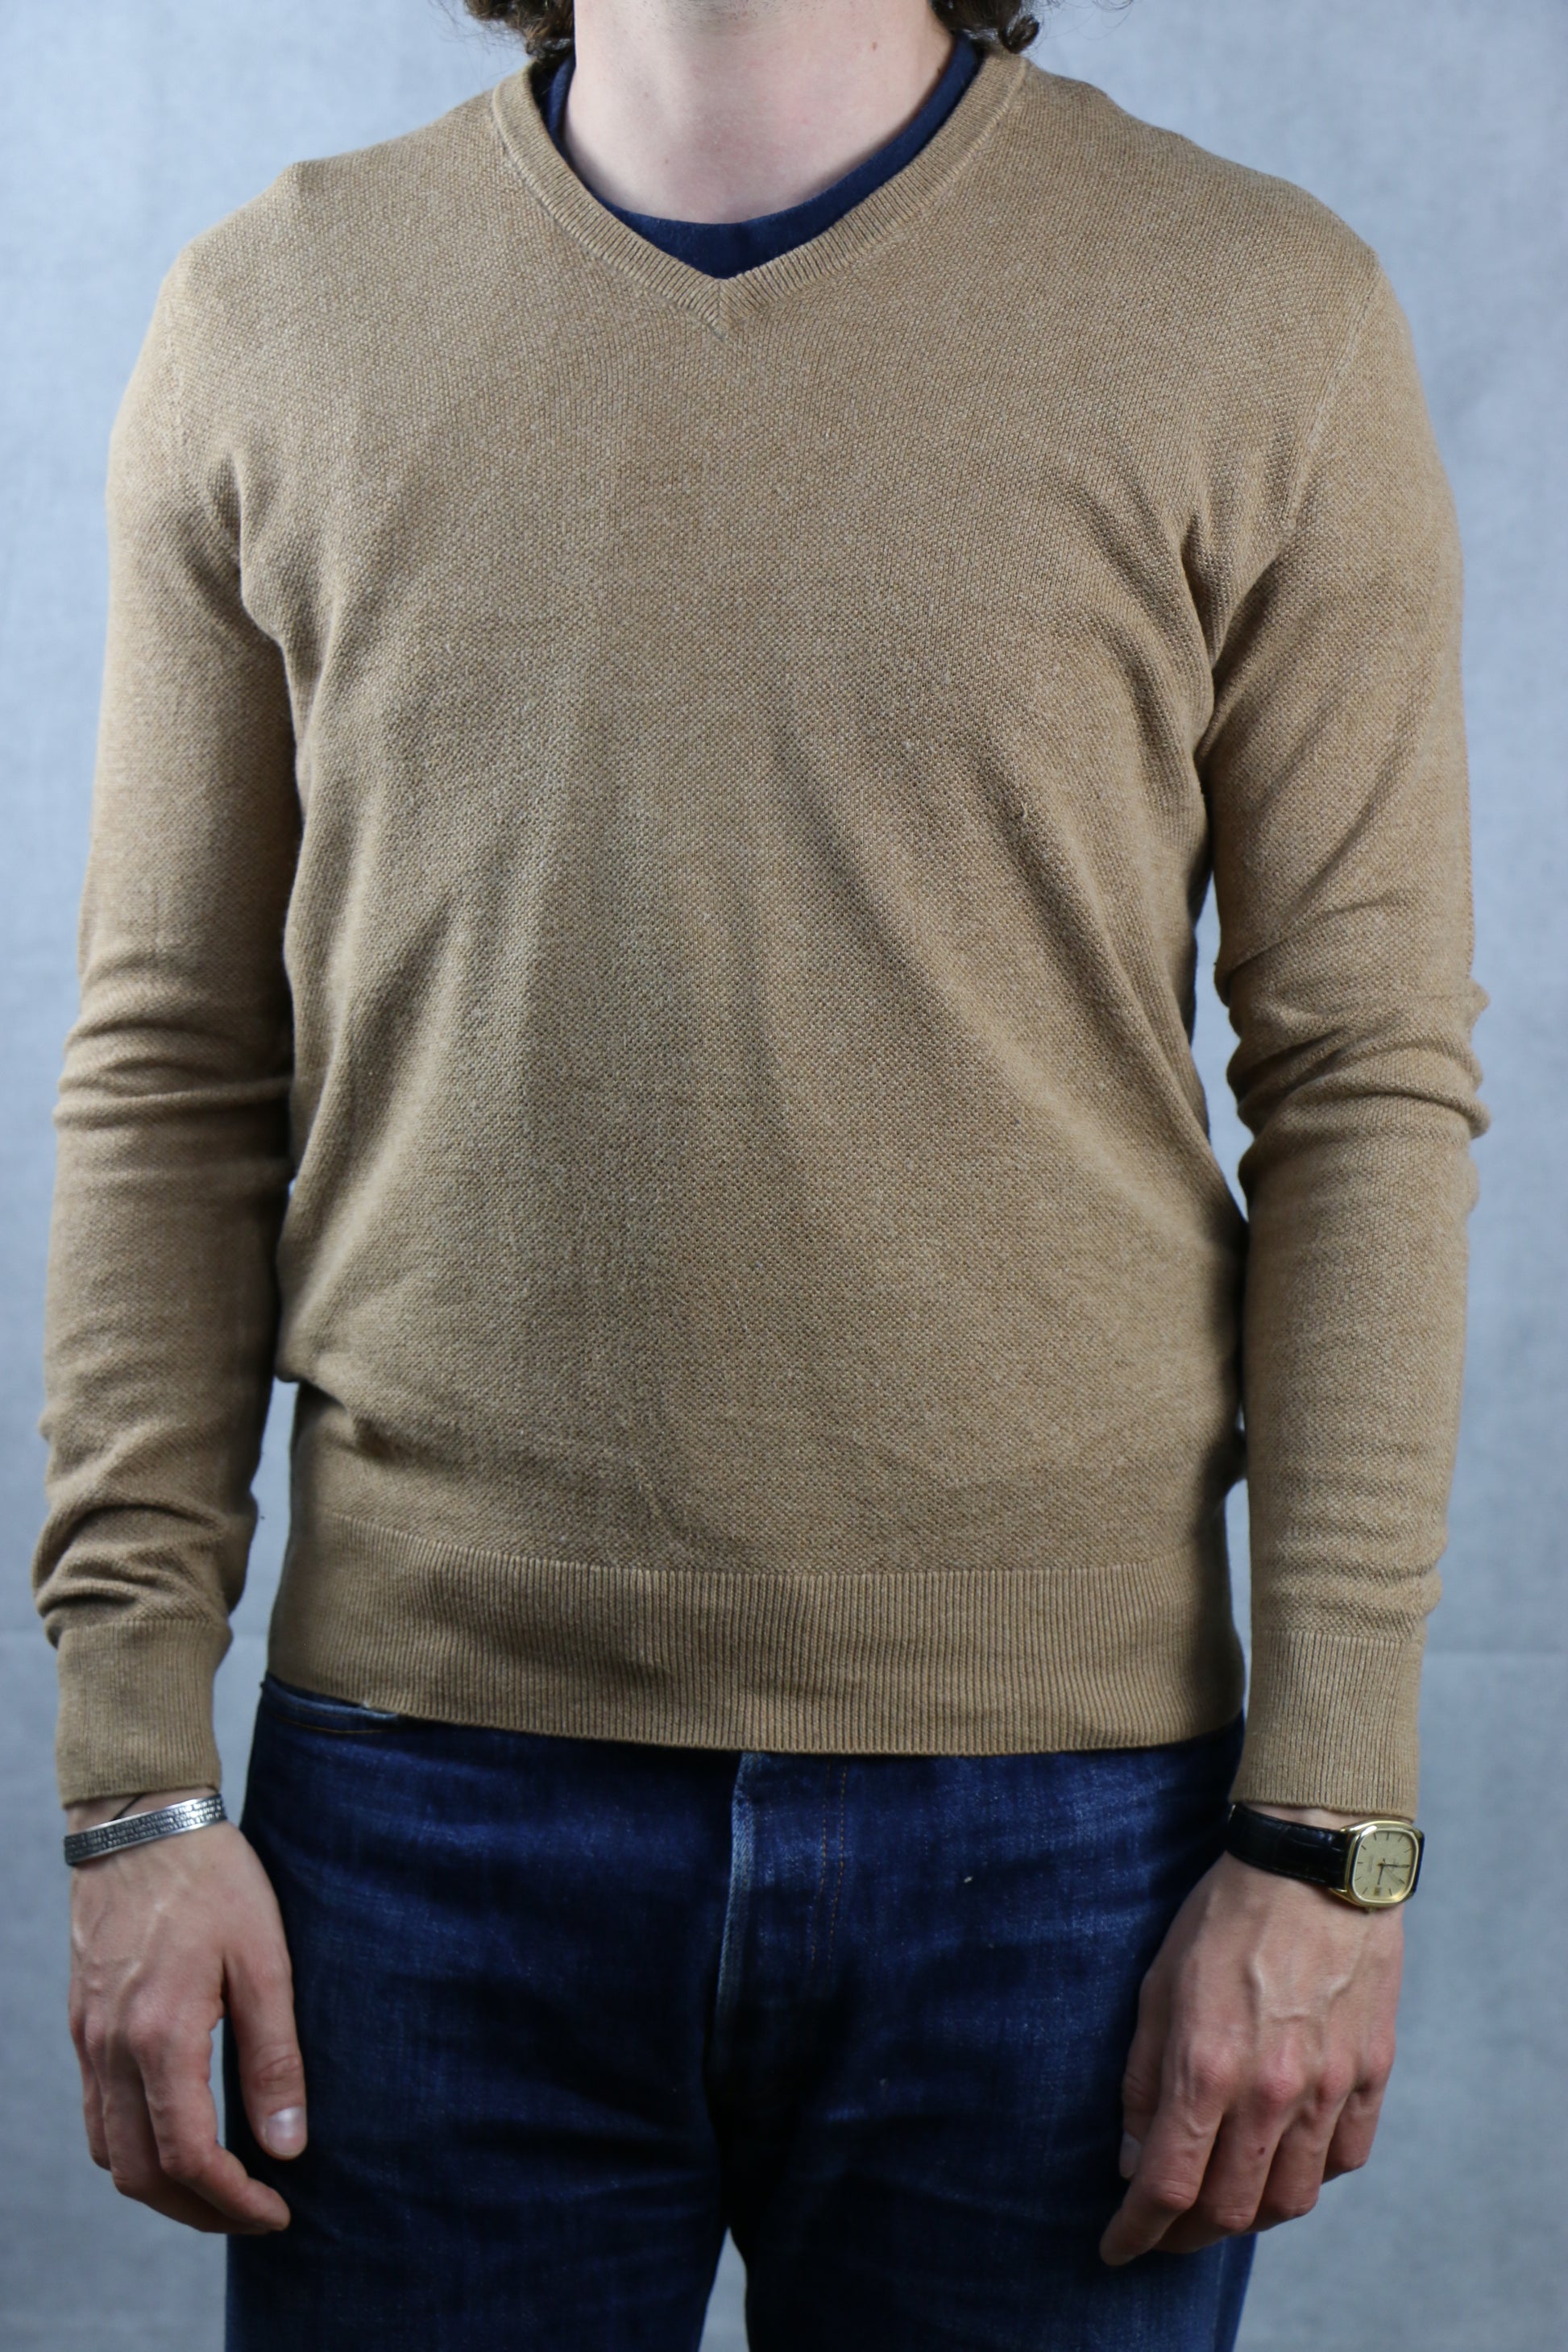 Polo Ralph Lauren Beige Sweater - vintage clothing clochard92.com